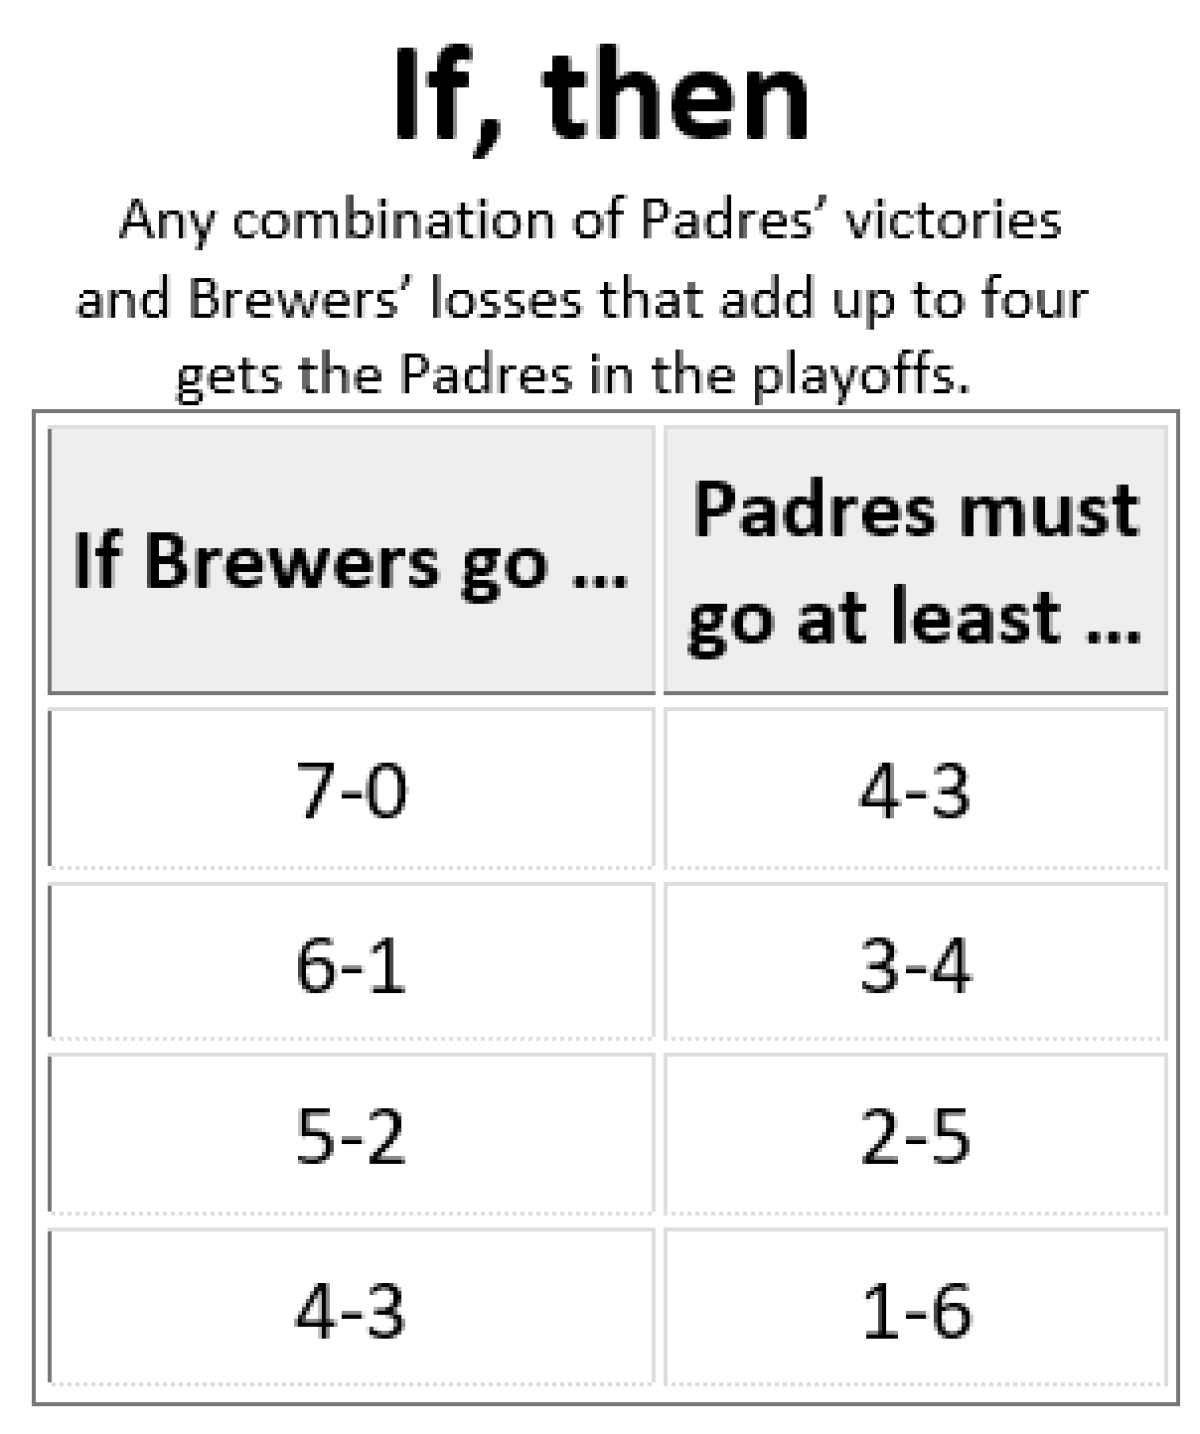 Brewers Padres magic number 0928